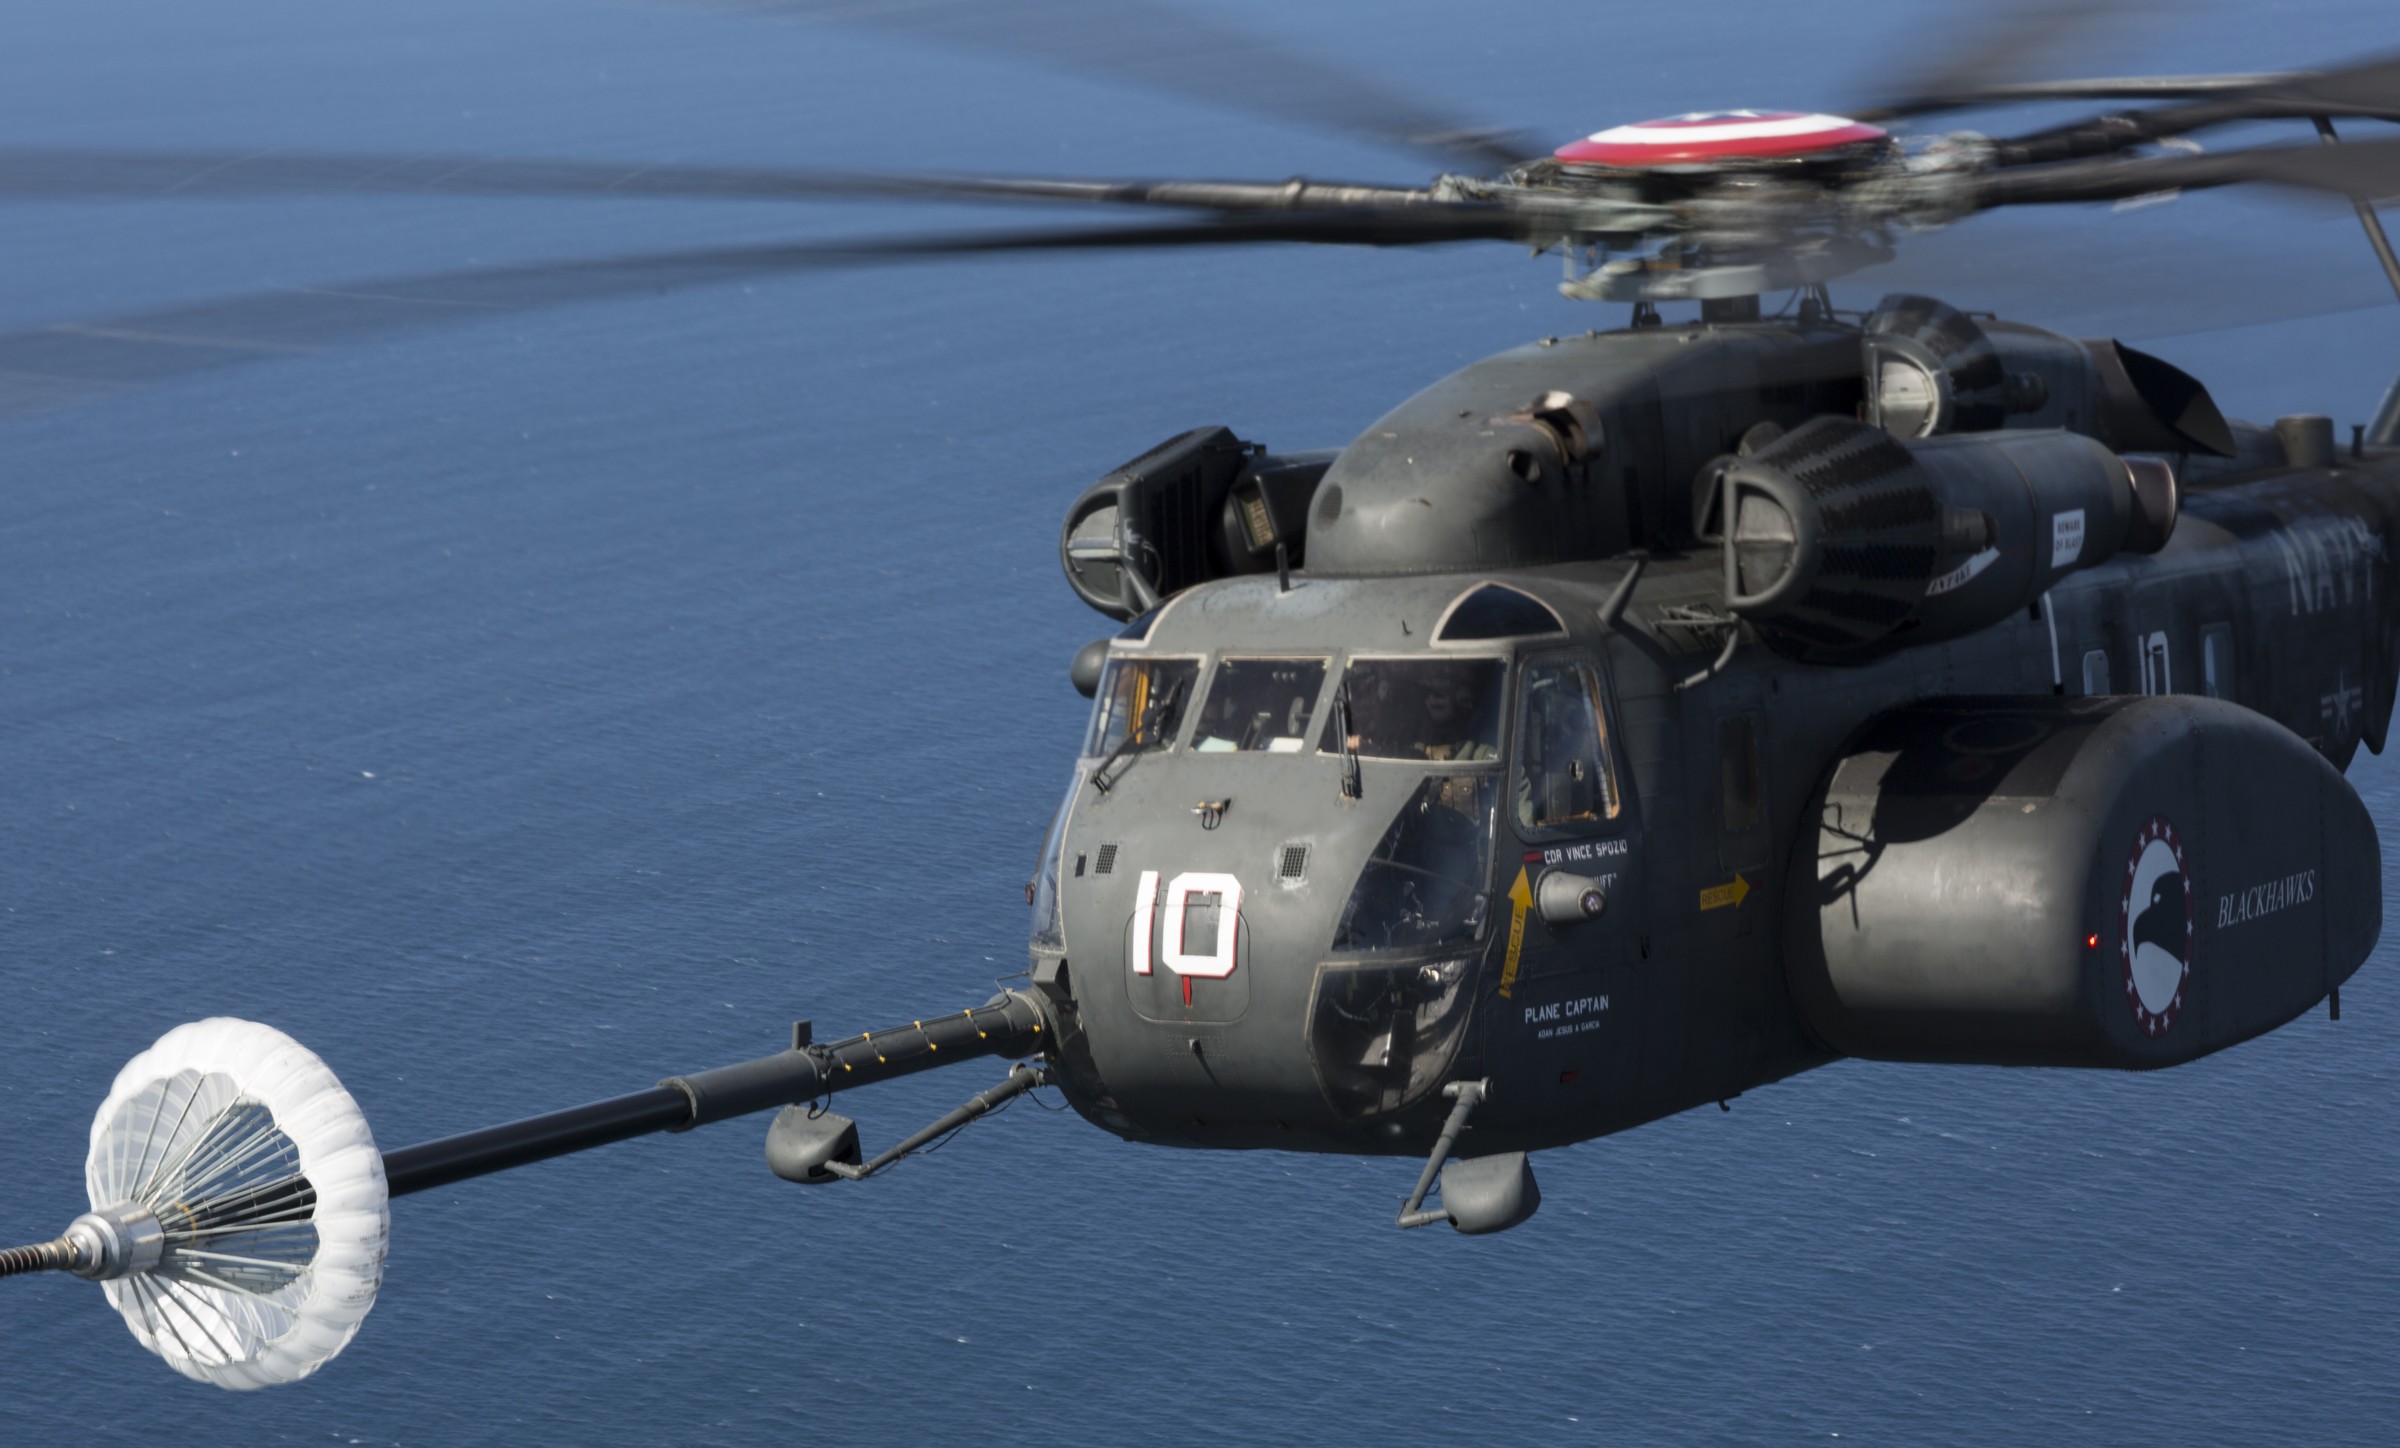 hm-15 blackhawks helicopter mine countermeasures squadron navy mh-53e sea dragon 33